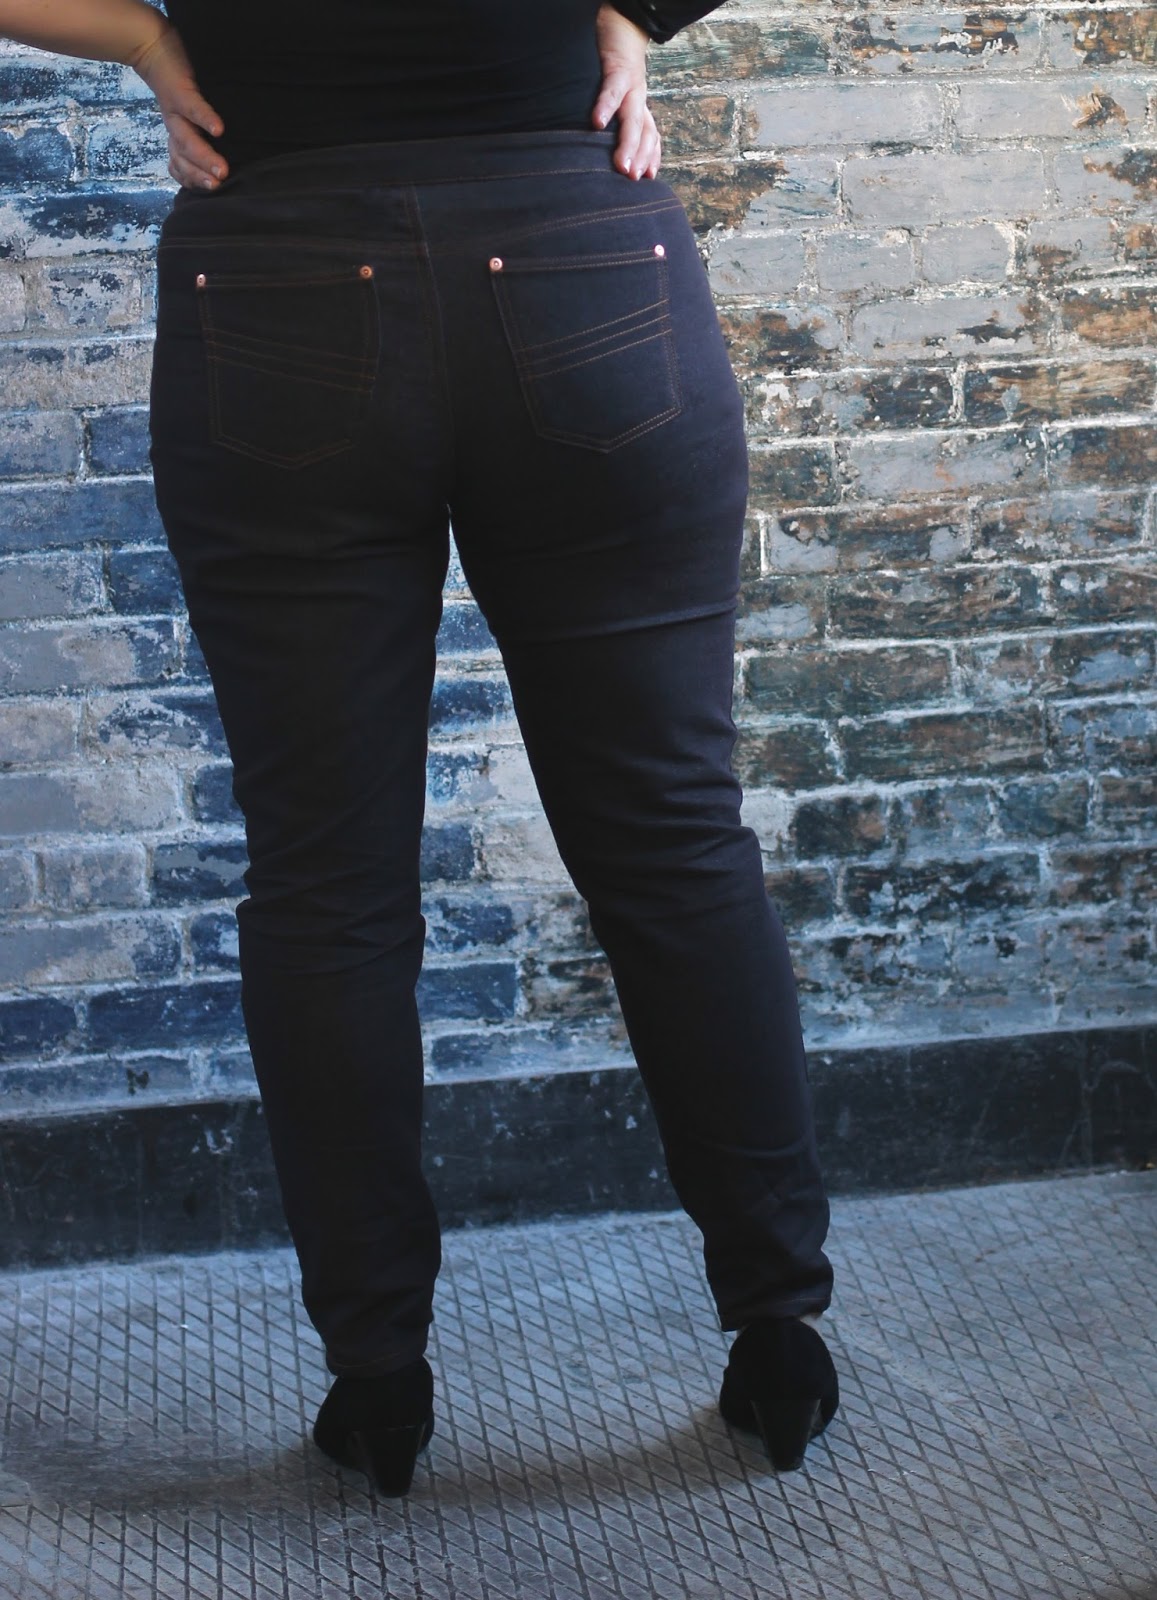 jeans high waist flare